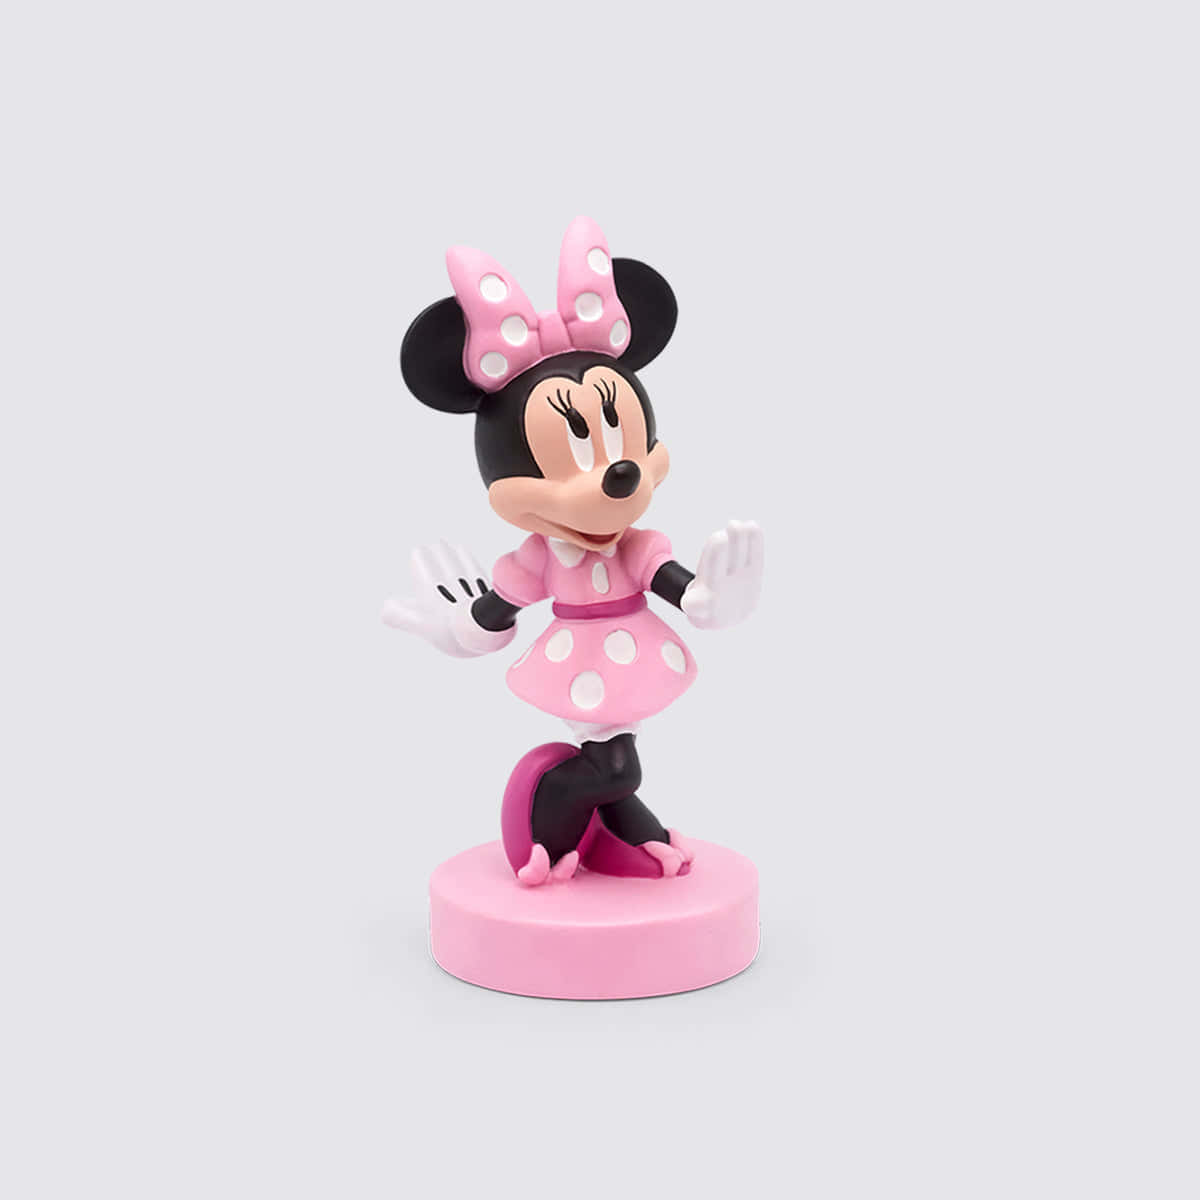 Minnie Mouse, Disney's lovable cartoon character